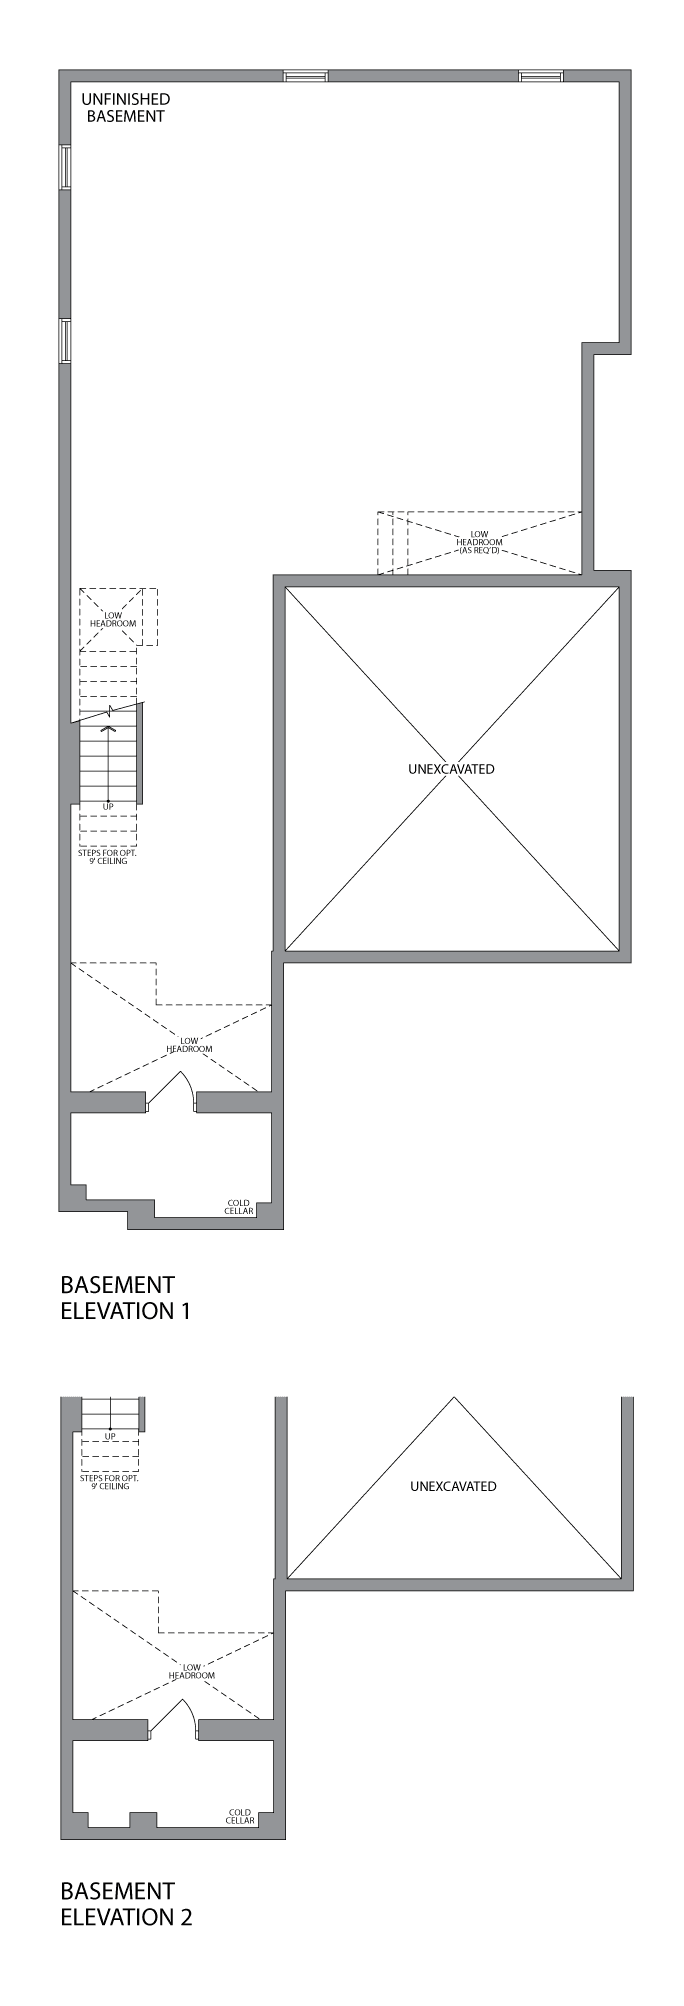 The Emerson  basement  